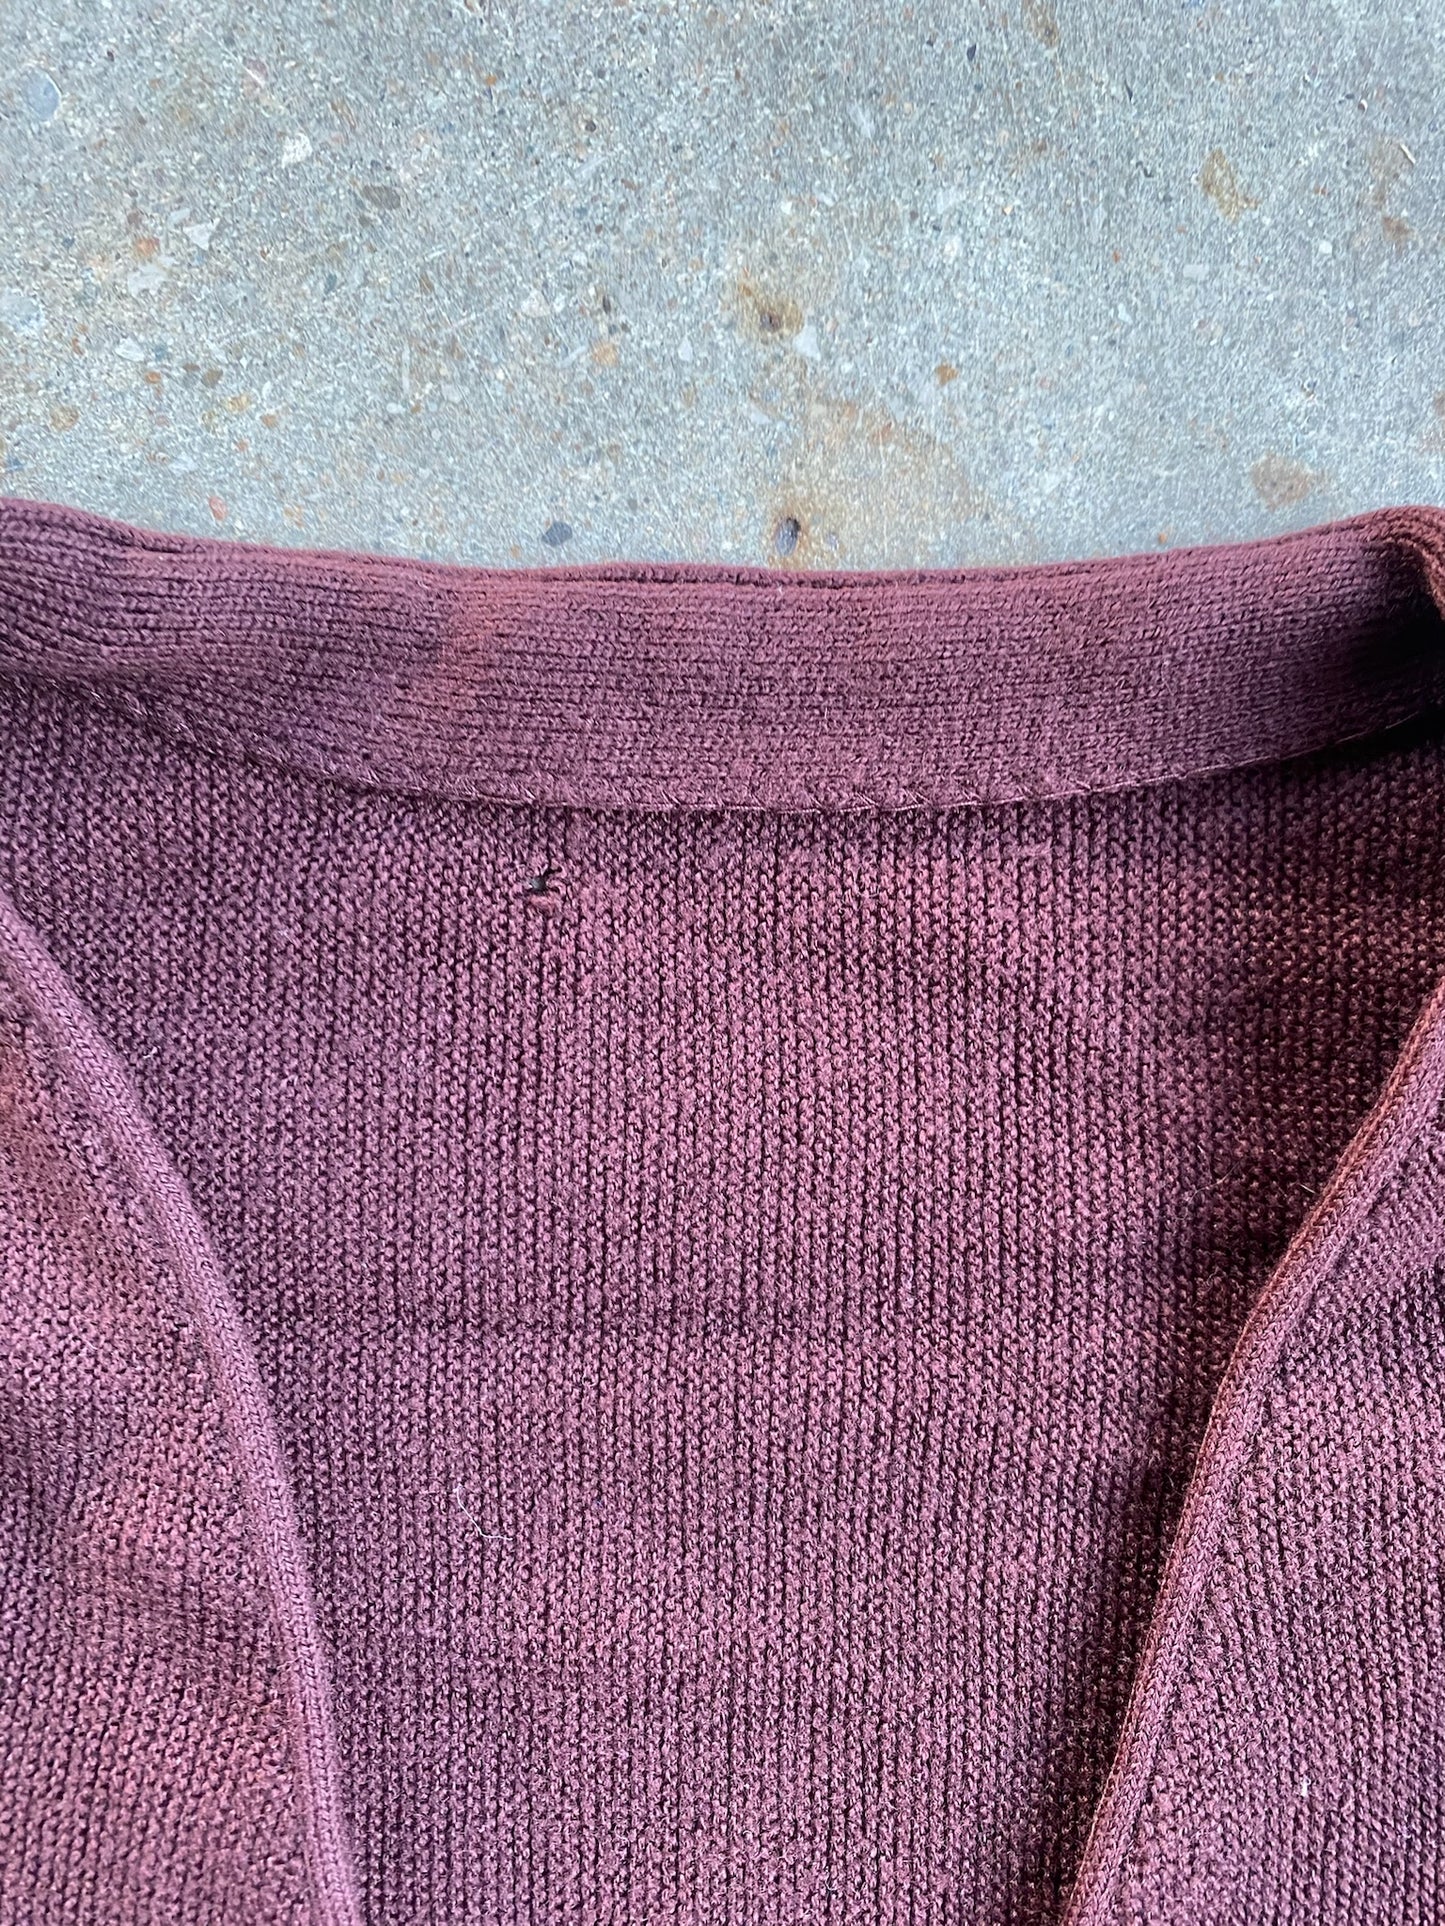 Vintage Knit Cardigan - XL